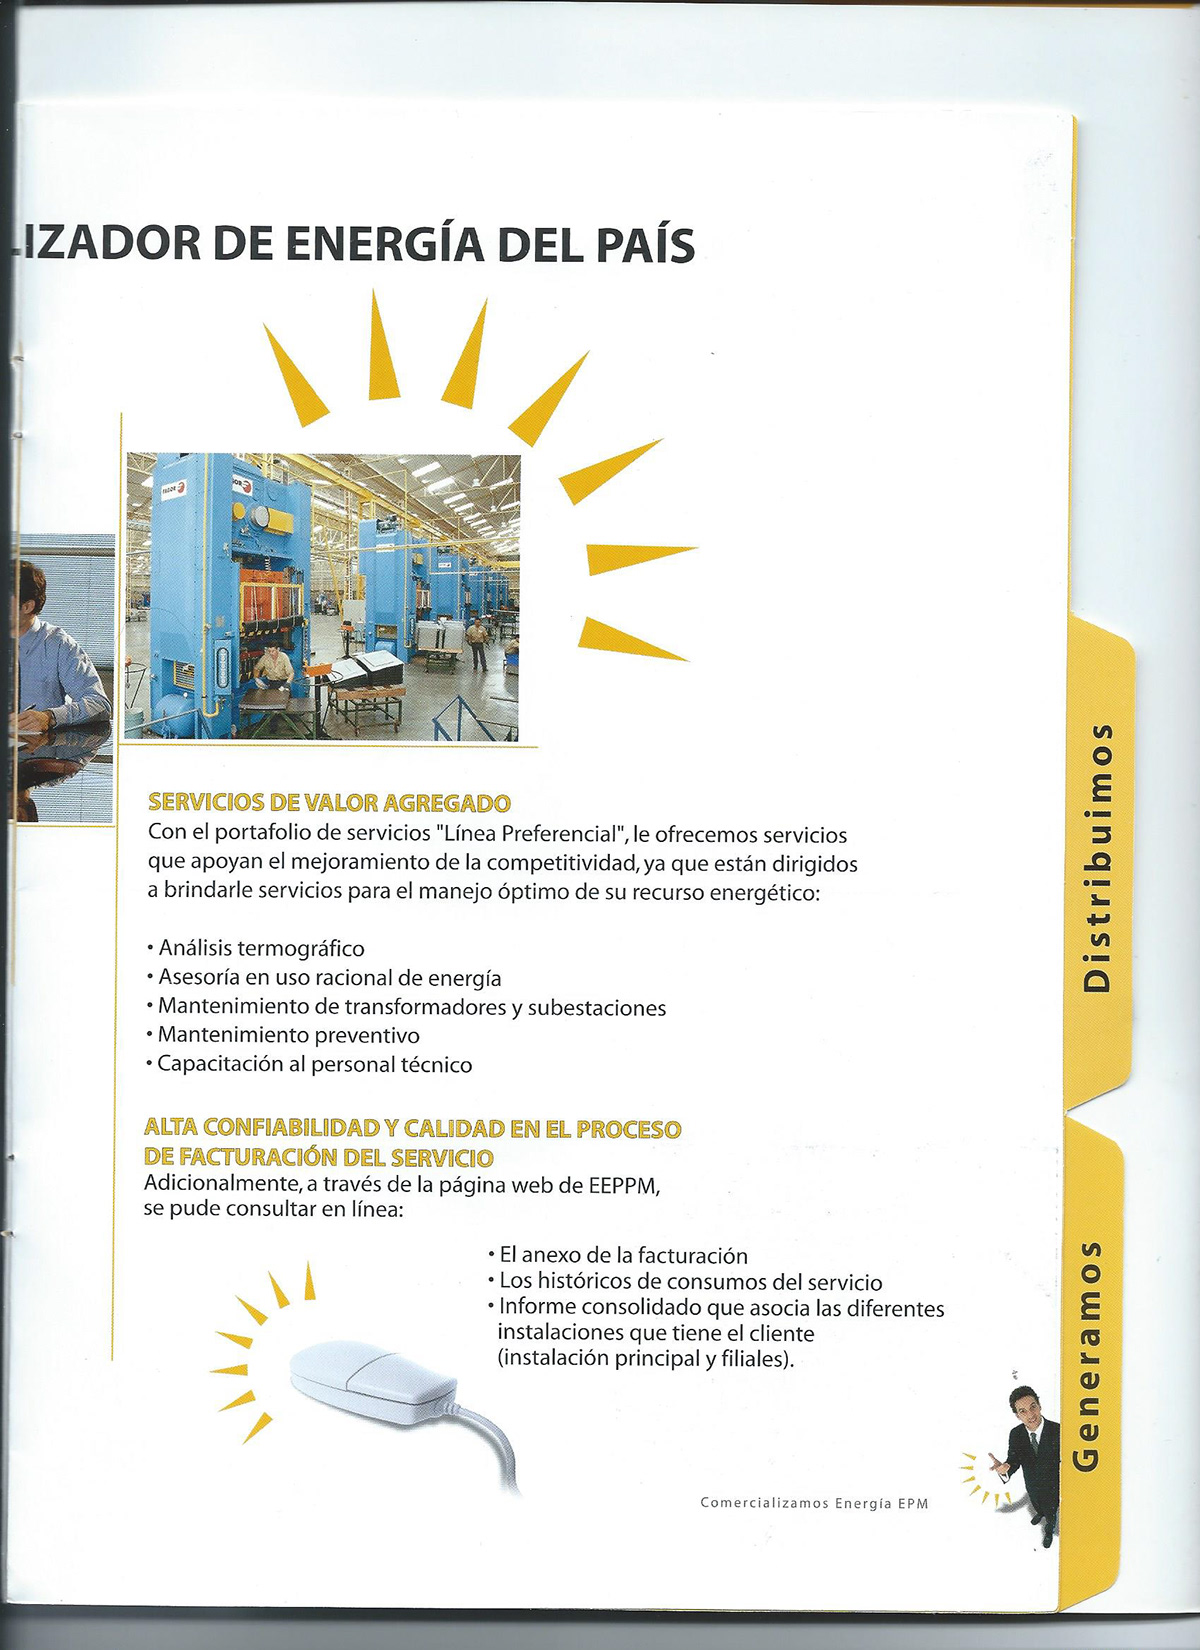 Power Generation Power Distribution Power Commercialization